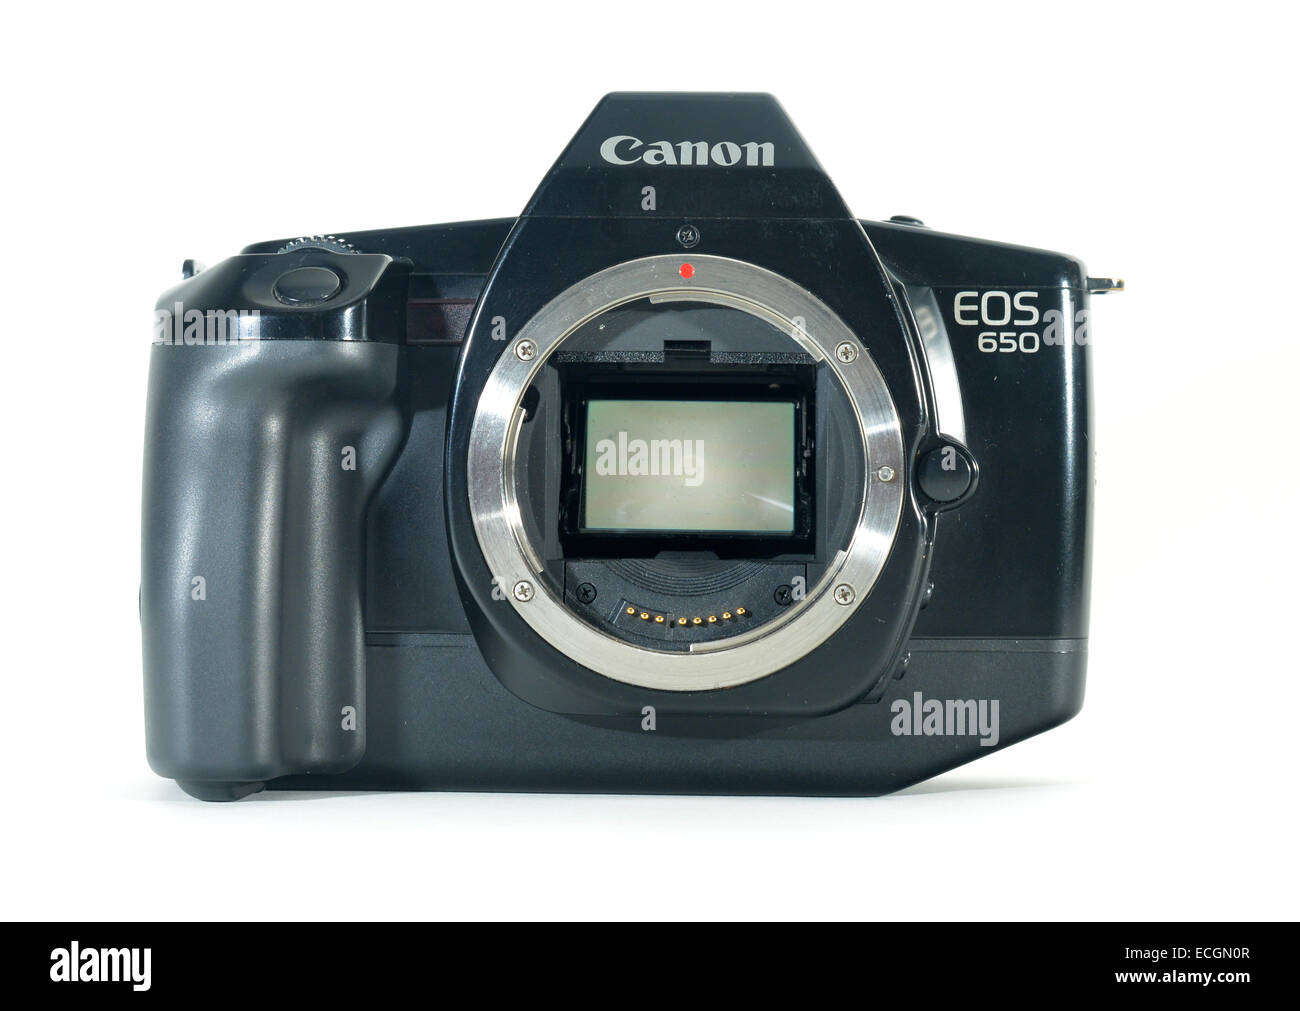 Canon EOS 650 SLR film camera, first generation of the auto focus range  Stock Photo Alamy